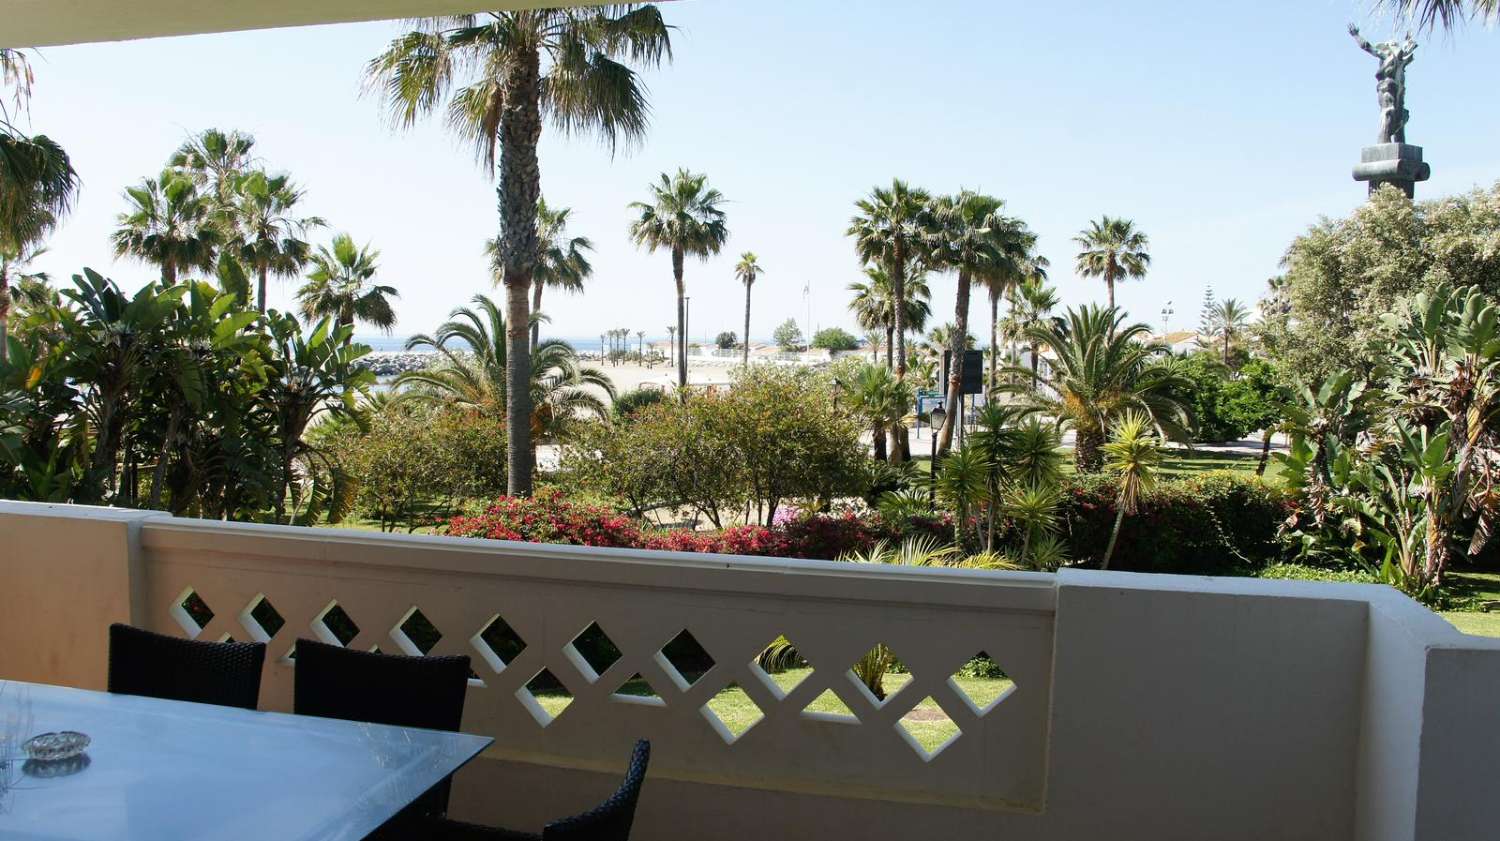 Location de vacances. Appartement avec vue sur la mer. Puerto Banus, Marbella.